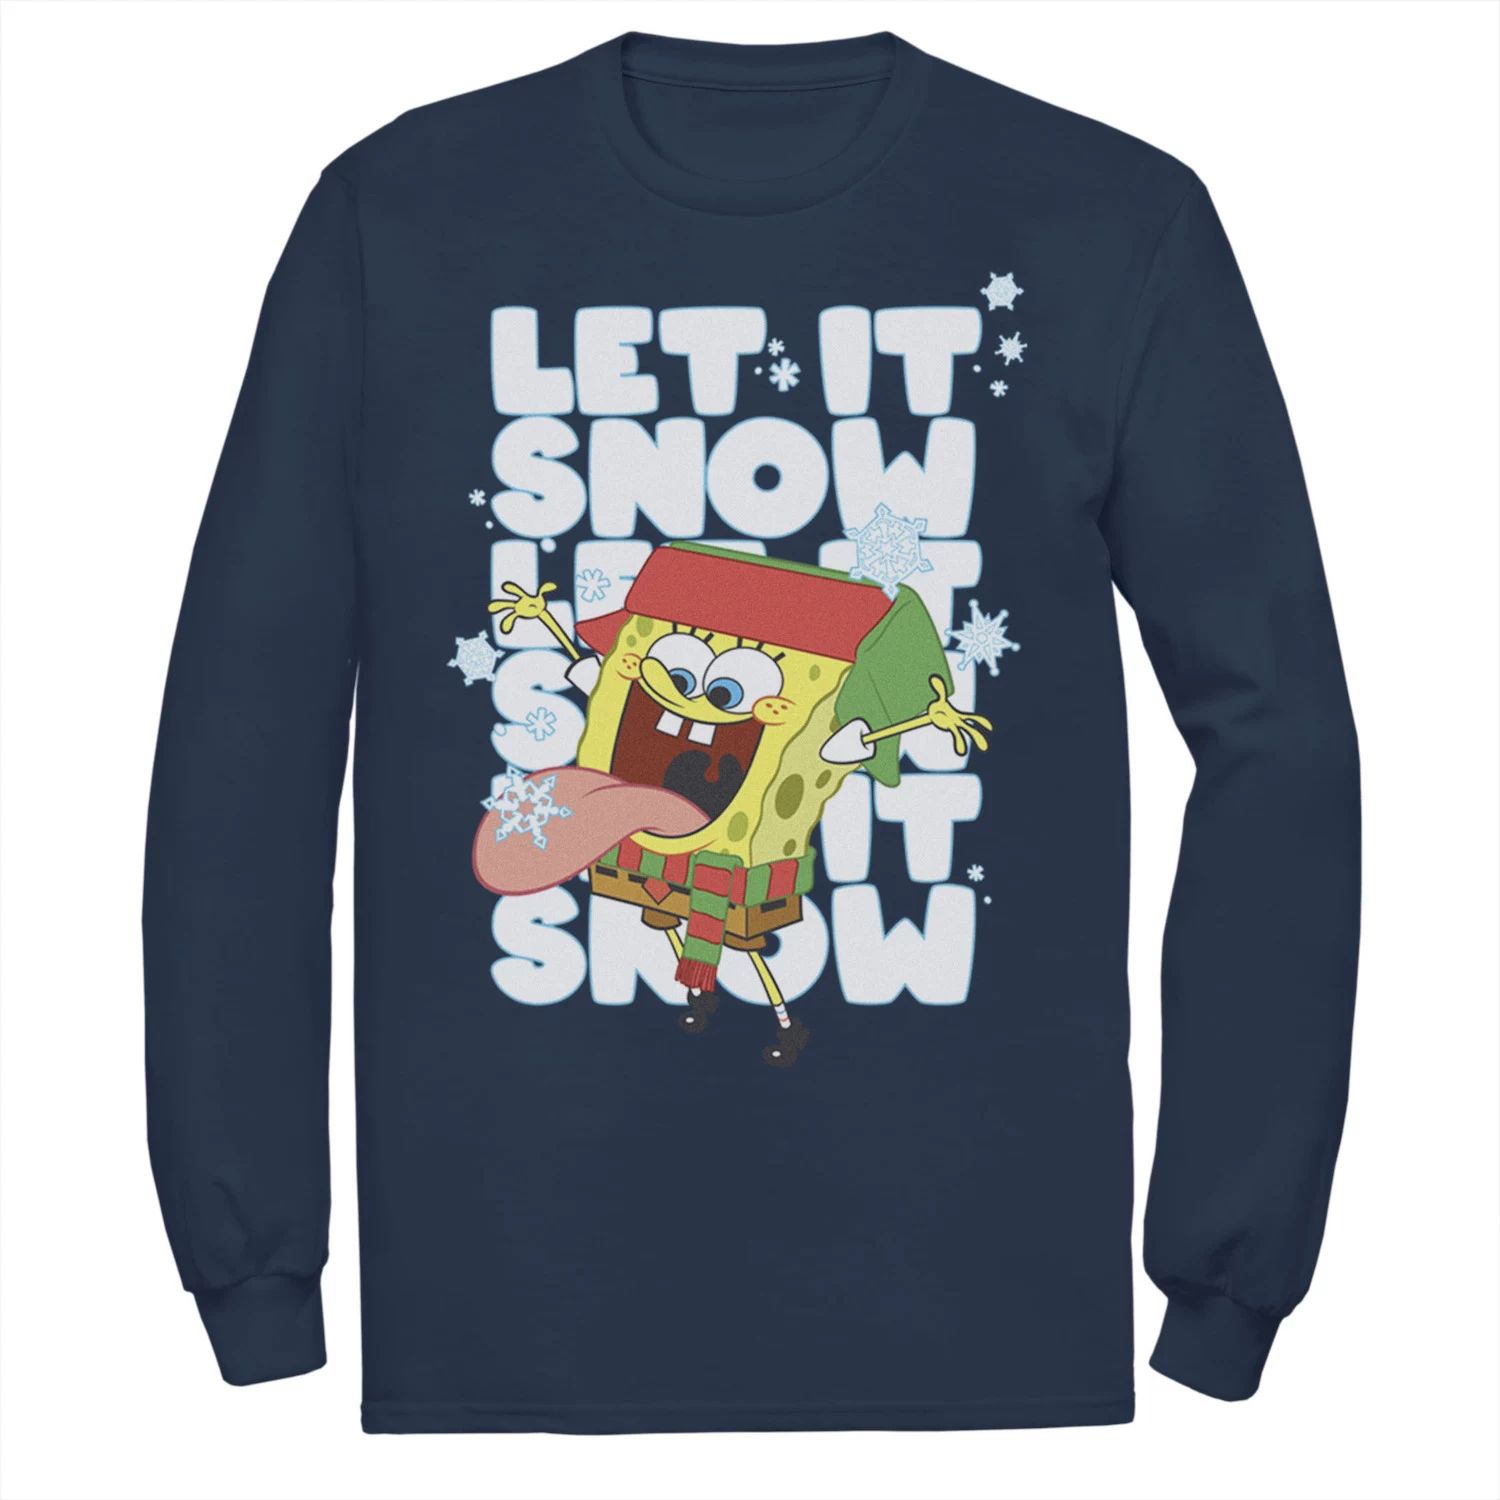 Мужская футболка Губка Боб Let It Snow Let It Snow Let It Snow с длинными рукавами и цветами Nickelodeon, синий детский набо miamitats let it snow 1 мл